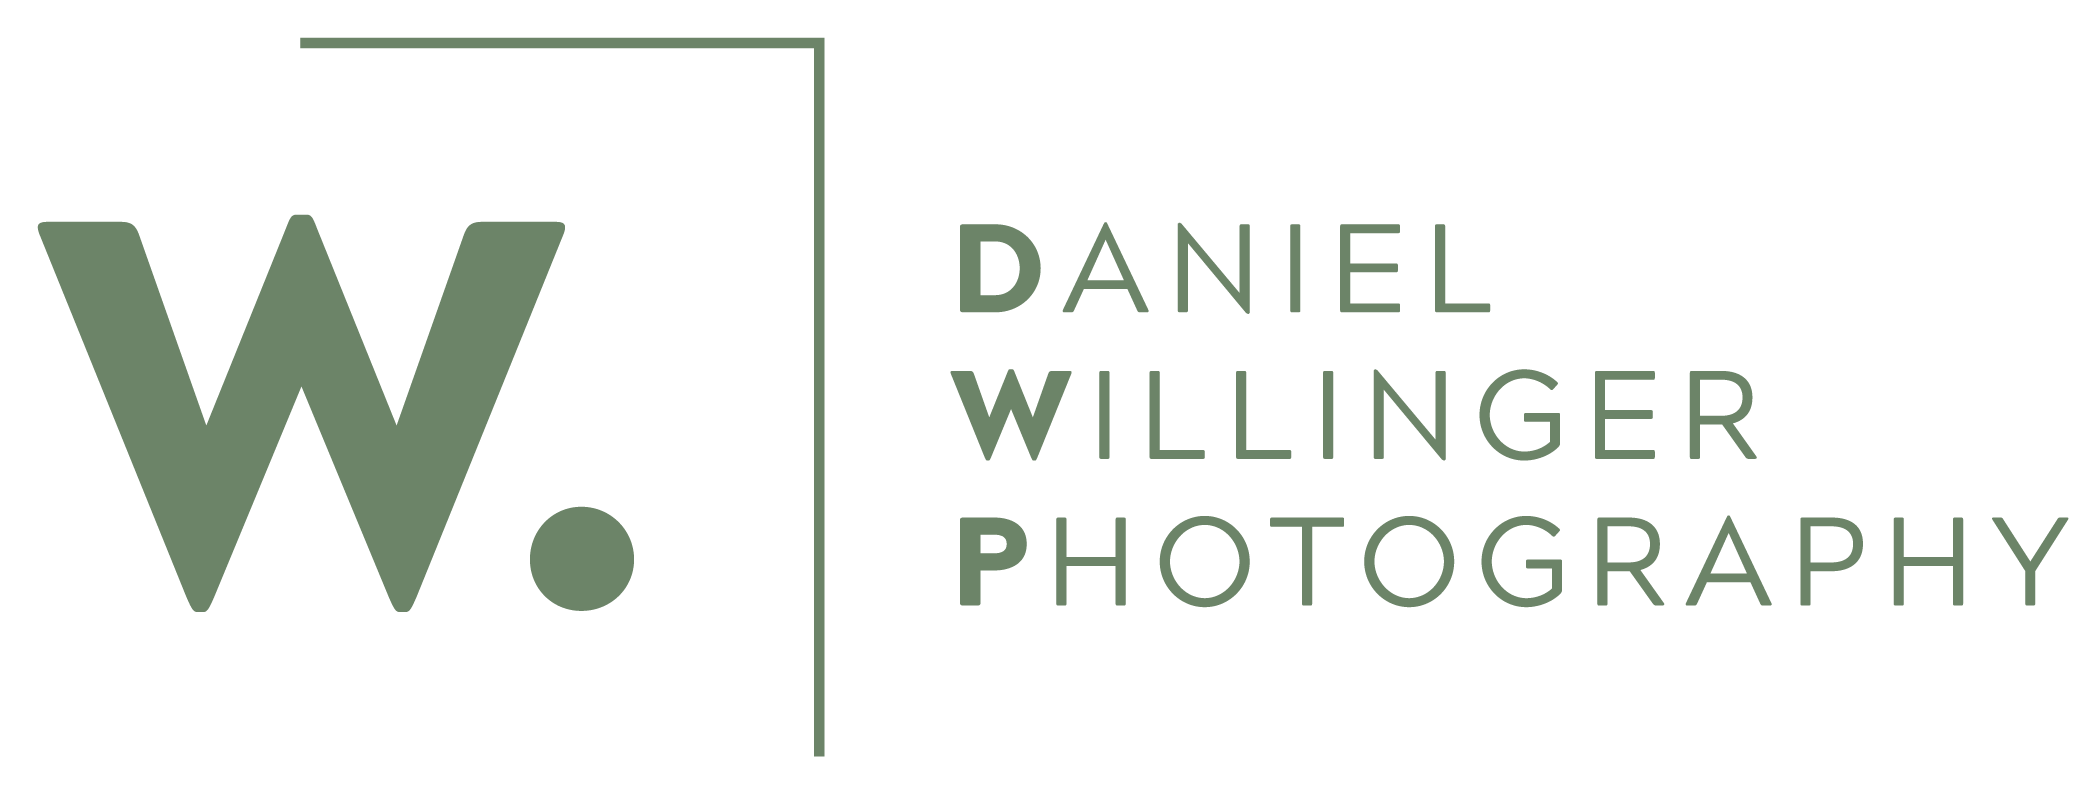 Daniel Willinger Photographie